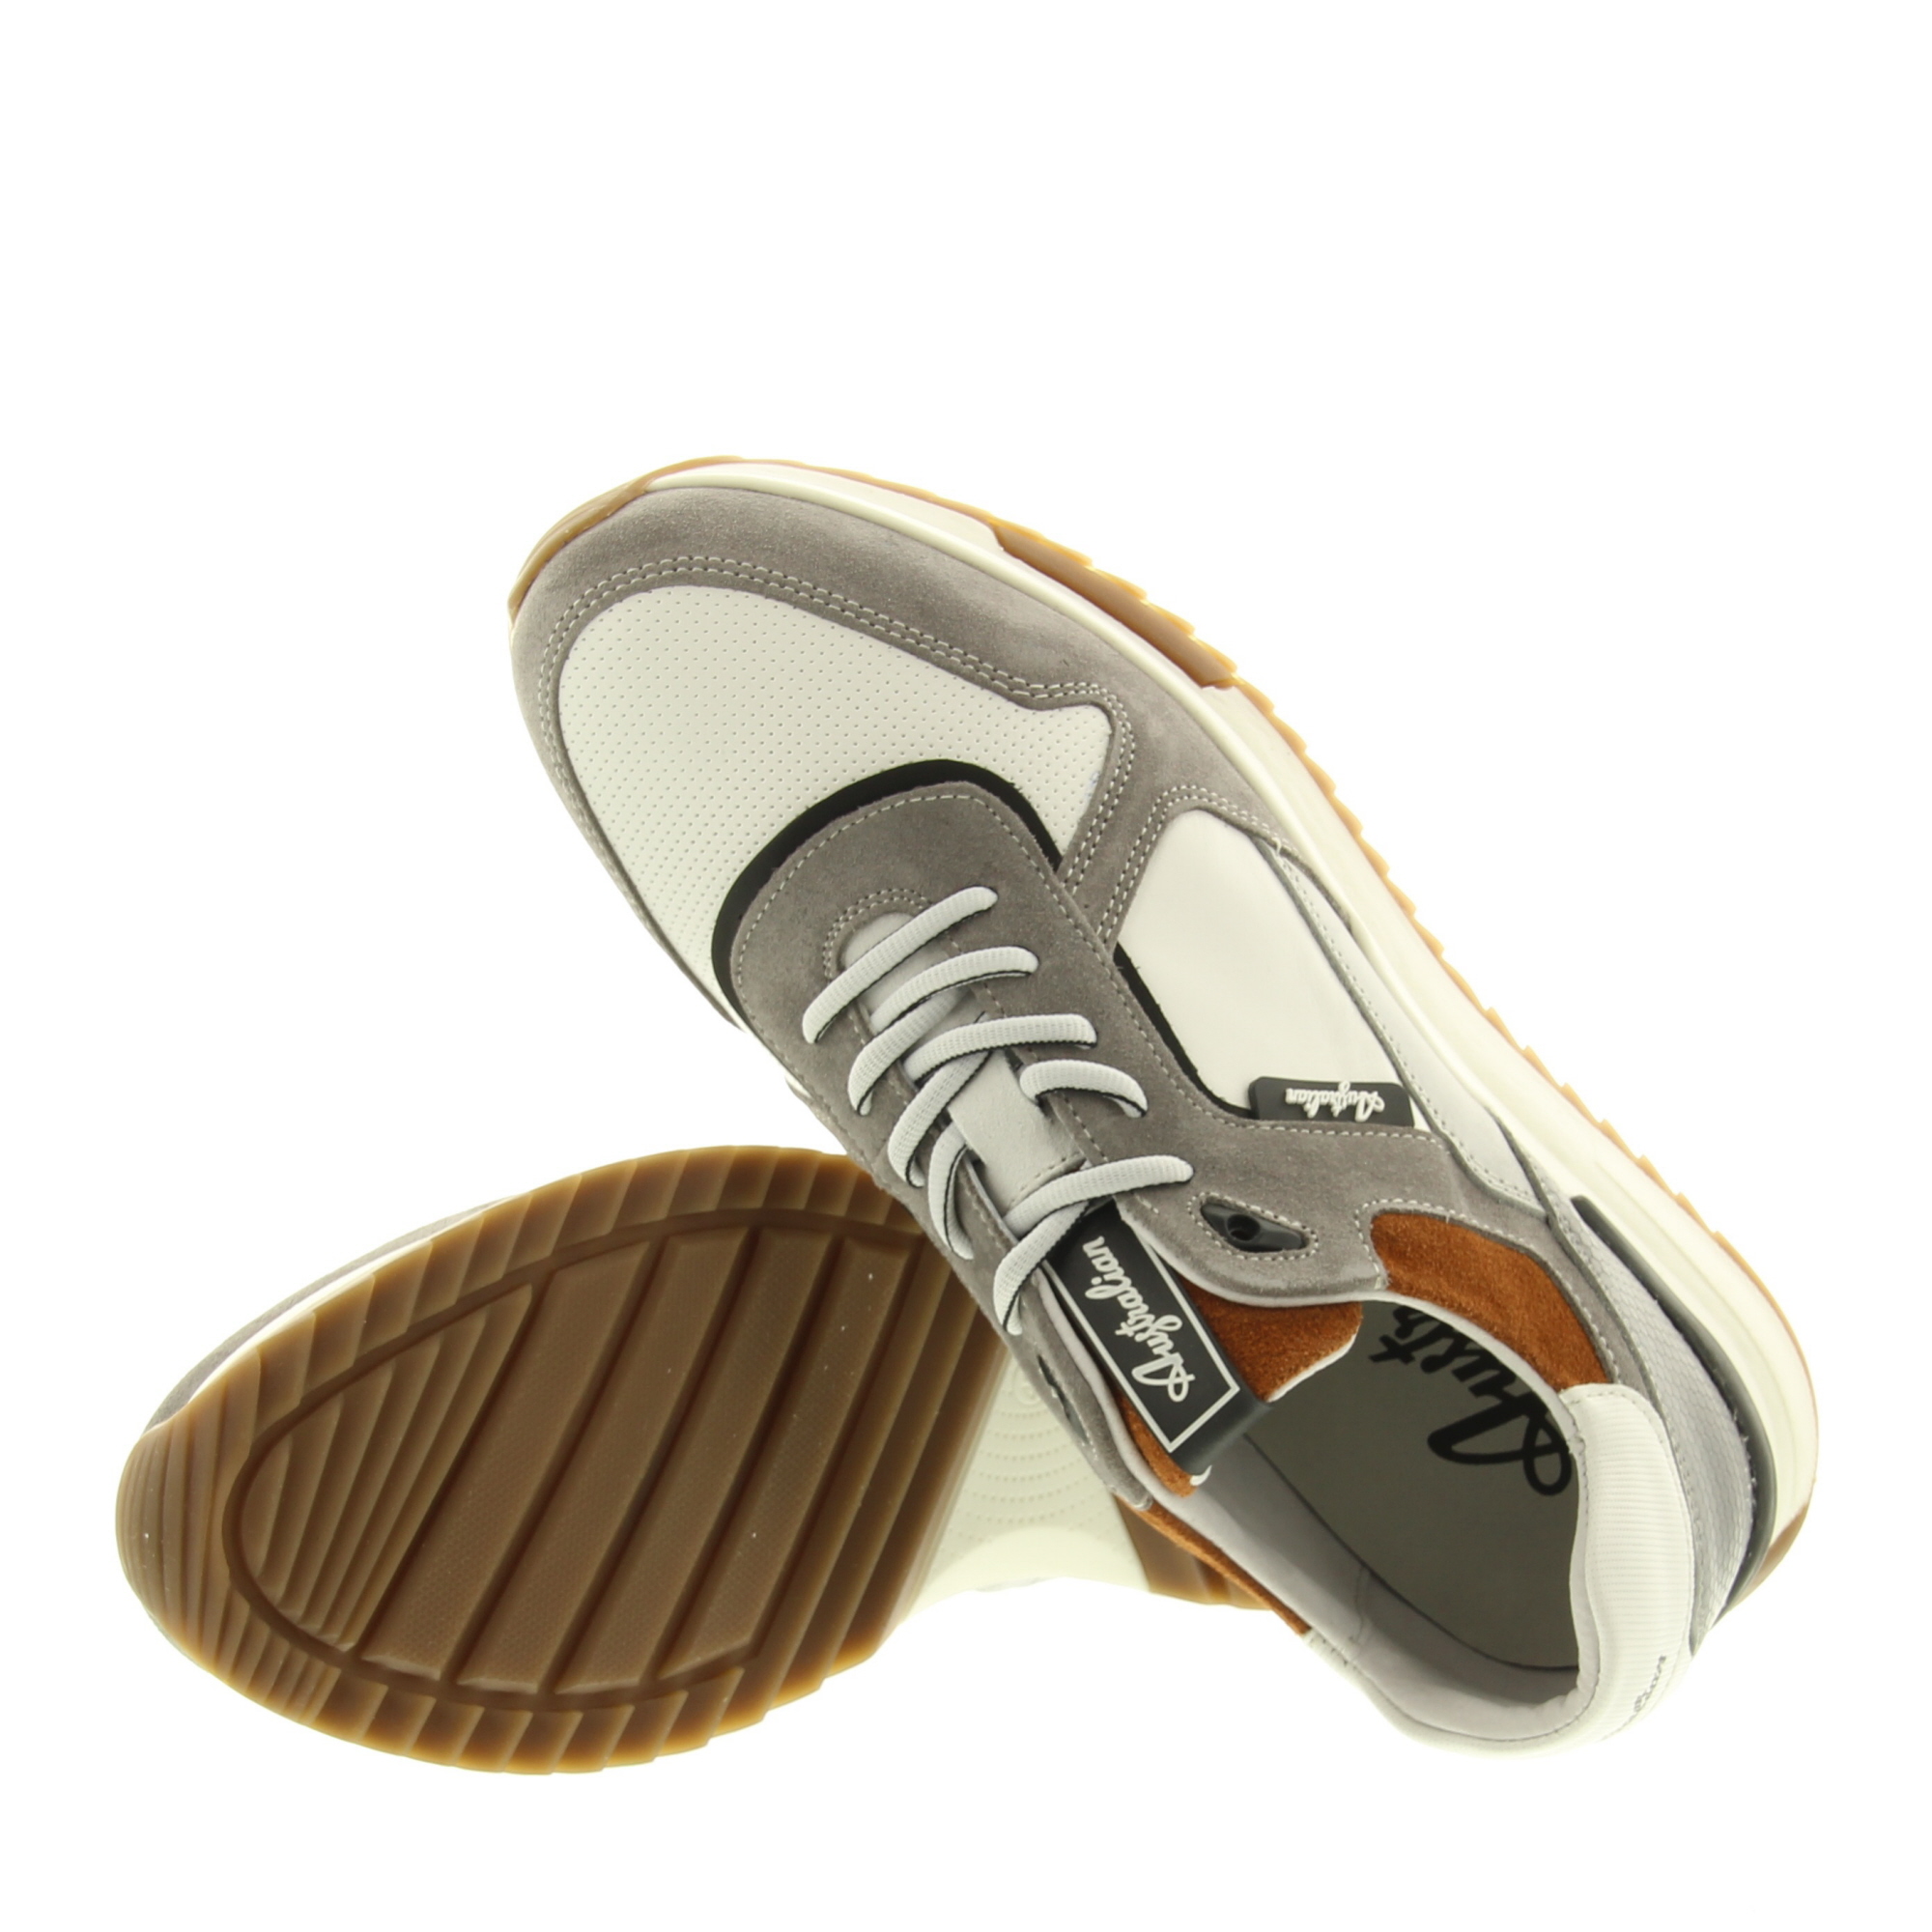 Australian Footwear Frederico 15.1543.03 KG6 Grey White Brick